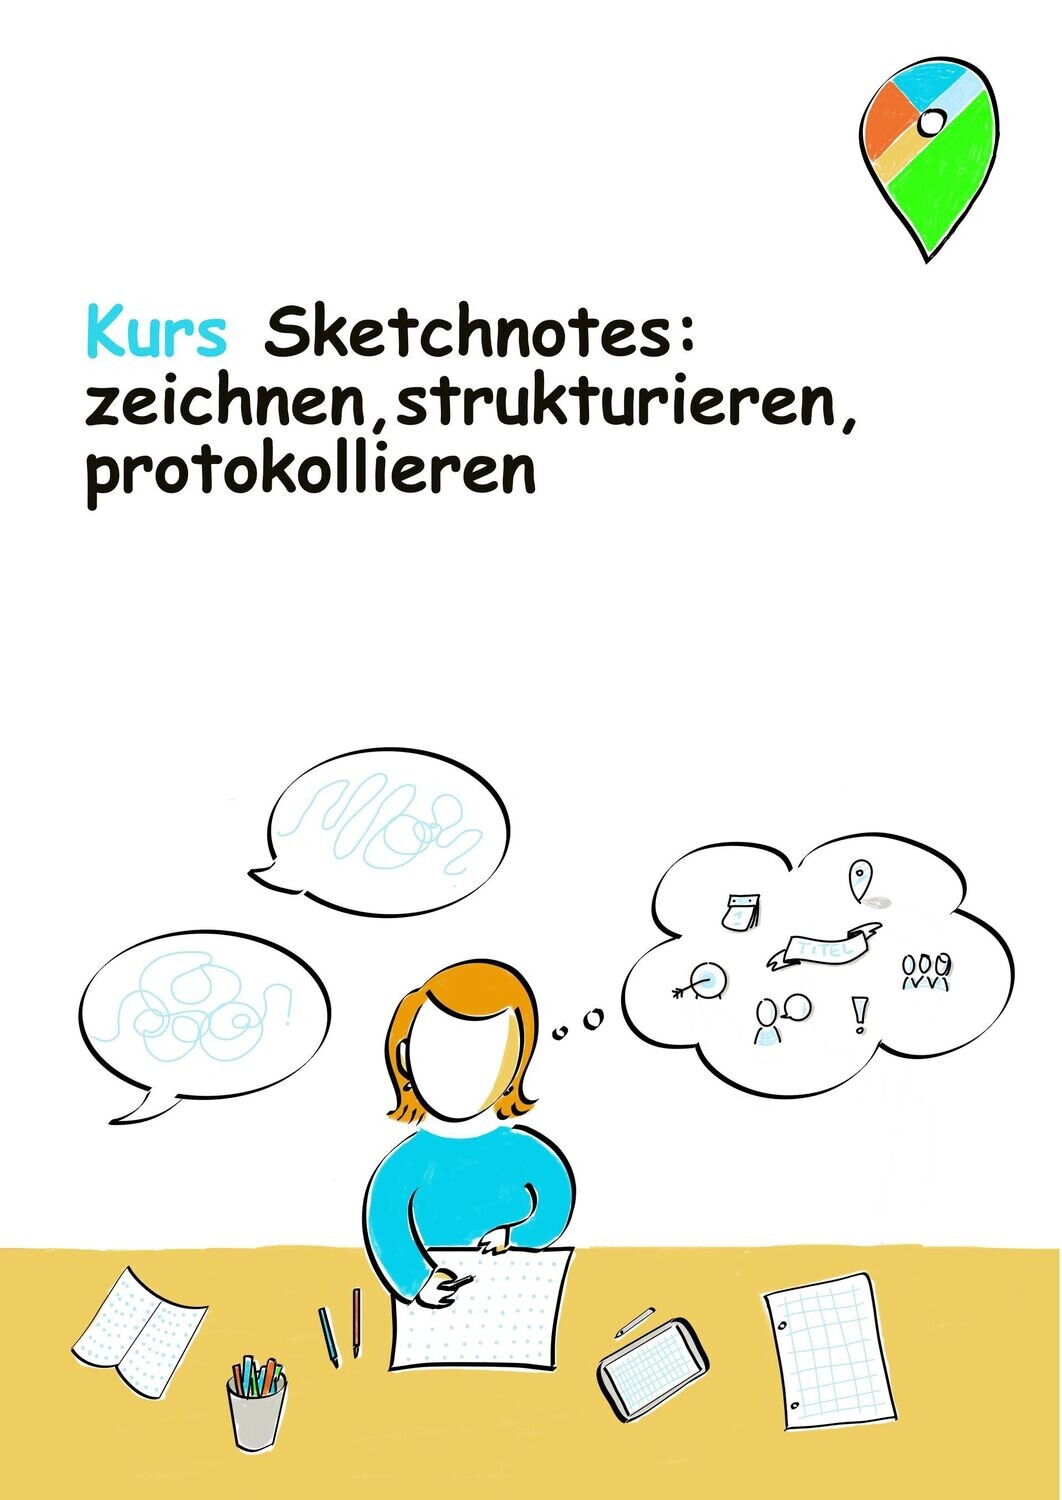 Kurs Sketchnotes in Bremen